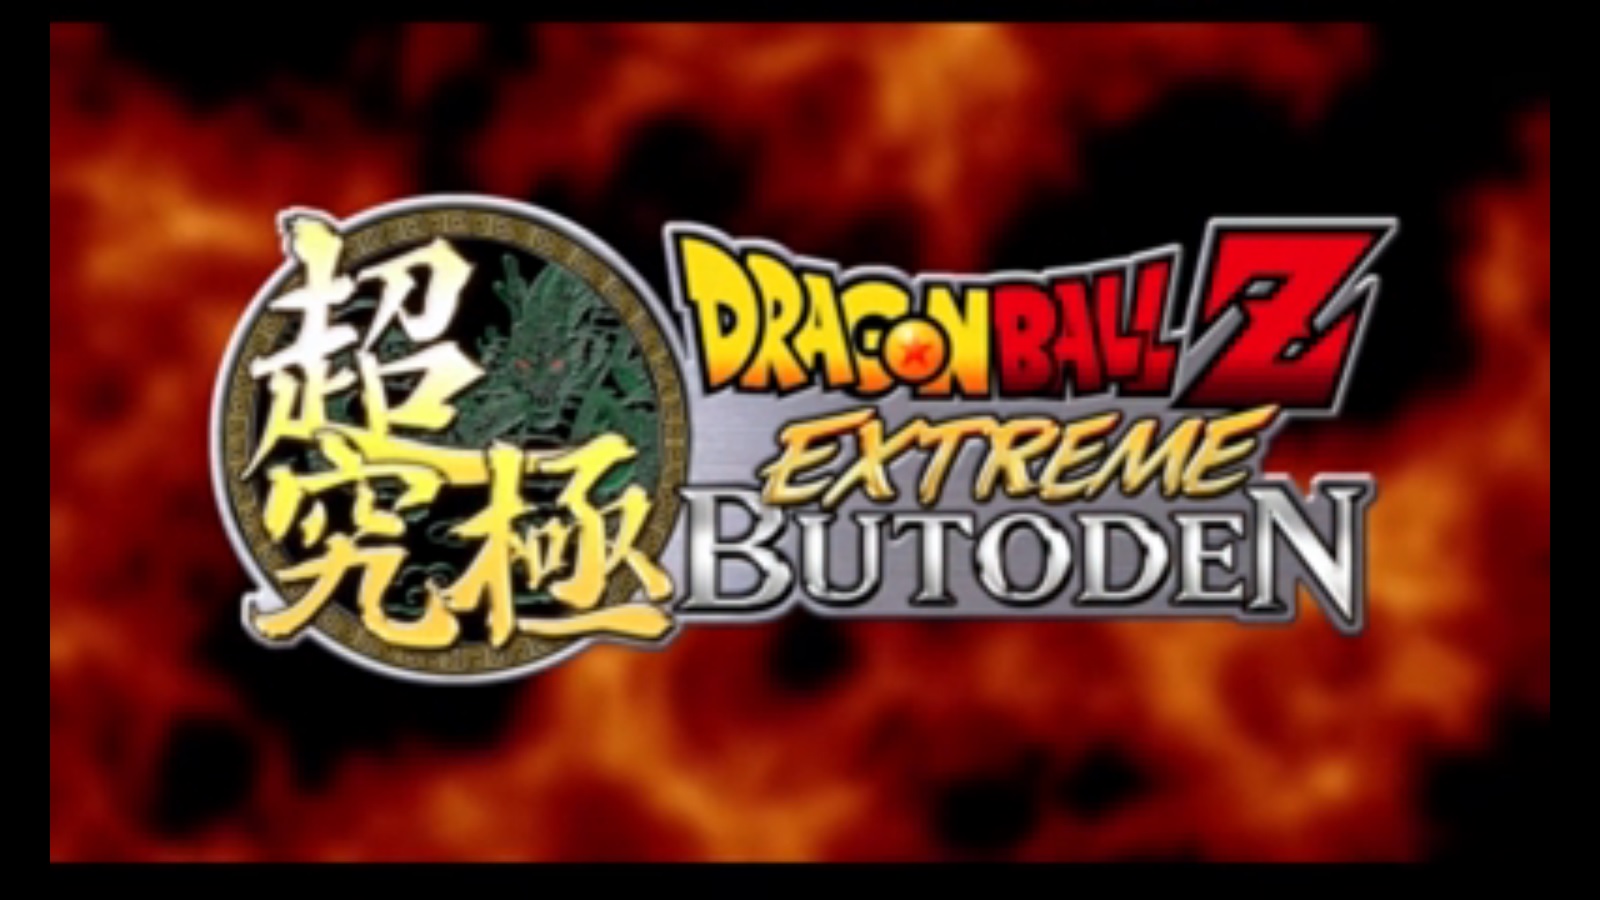 Dragonball Z: Extreme Butoden DEMO